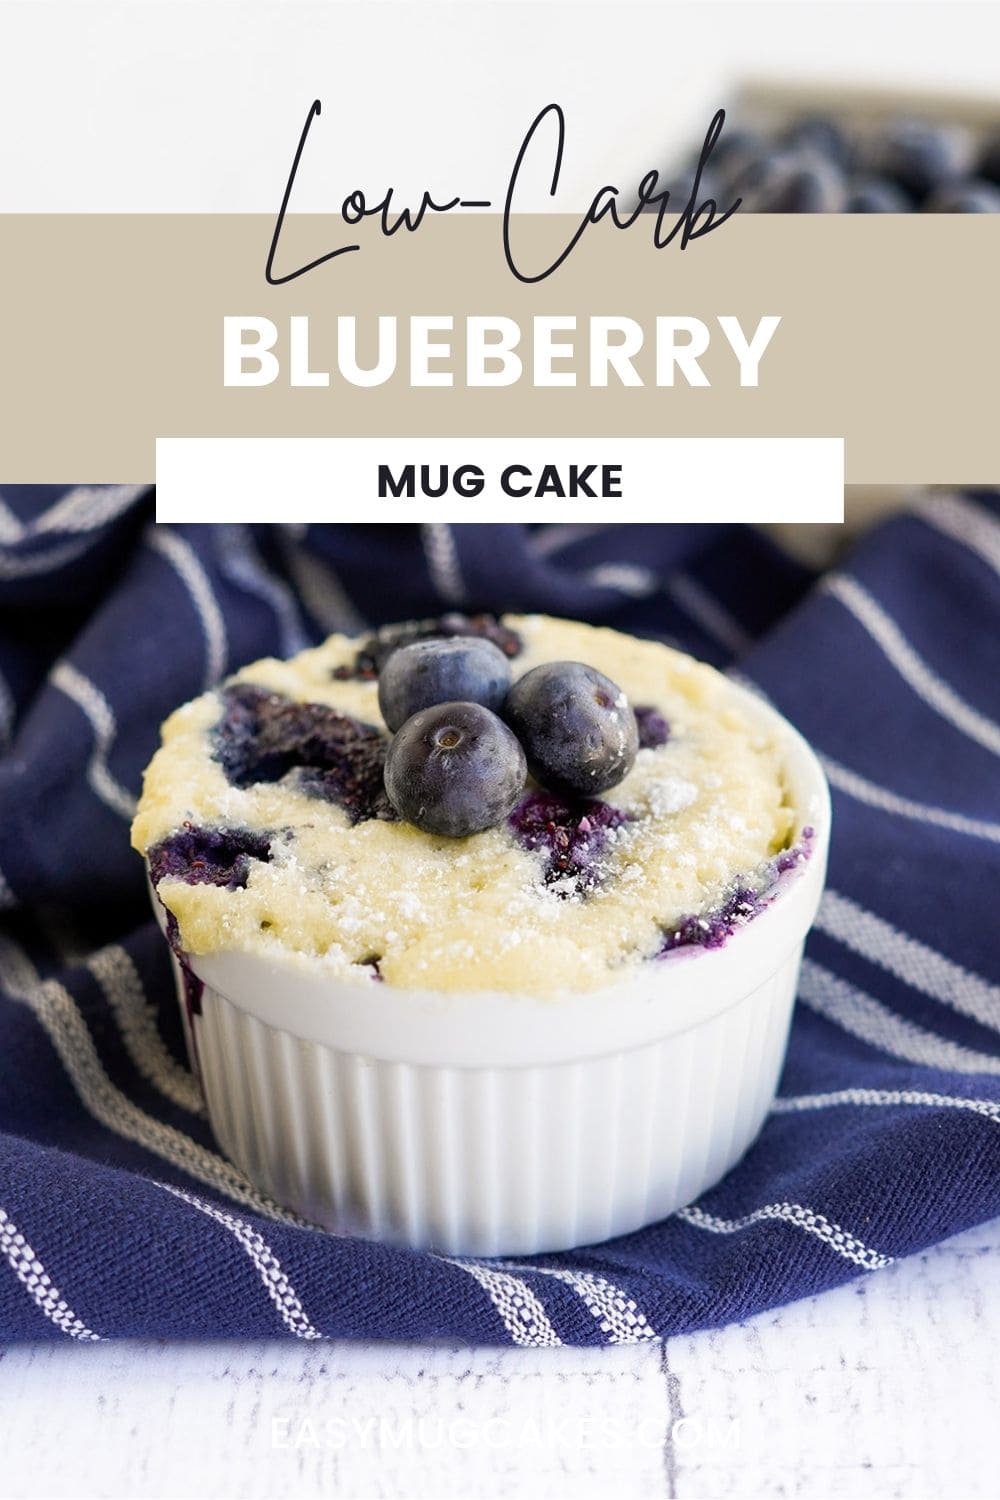 Blueberry mug cake in a white ramekin on a blue napkin.